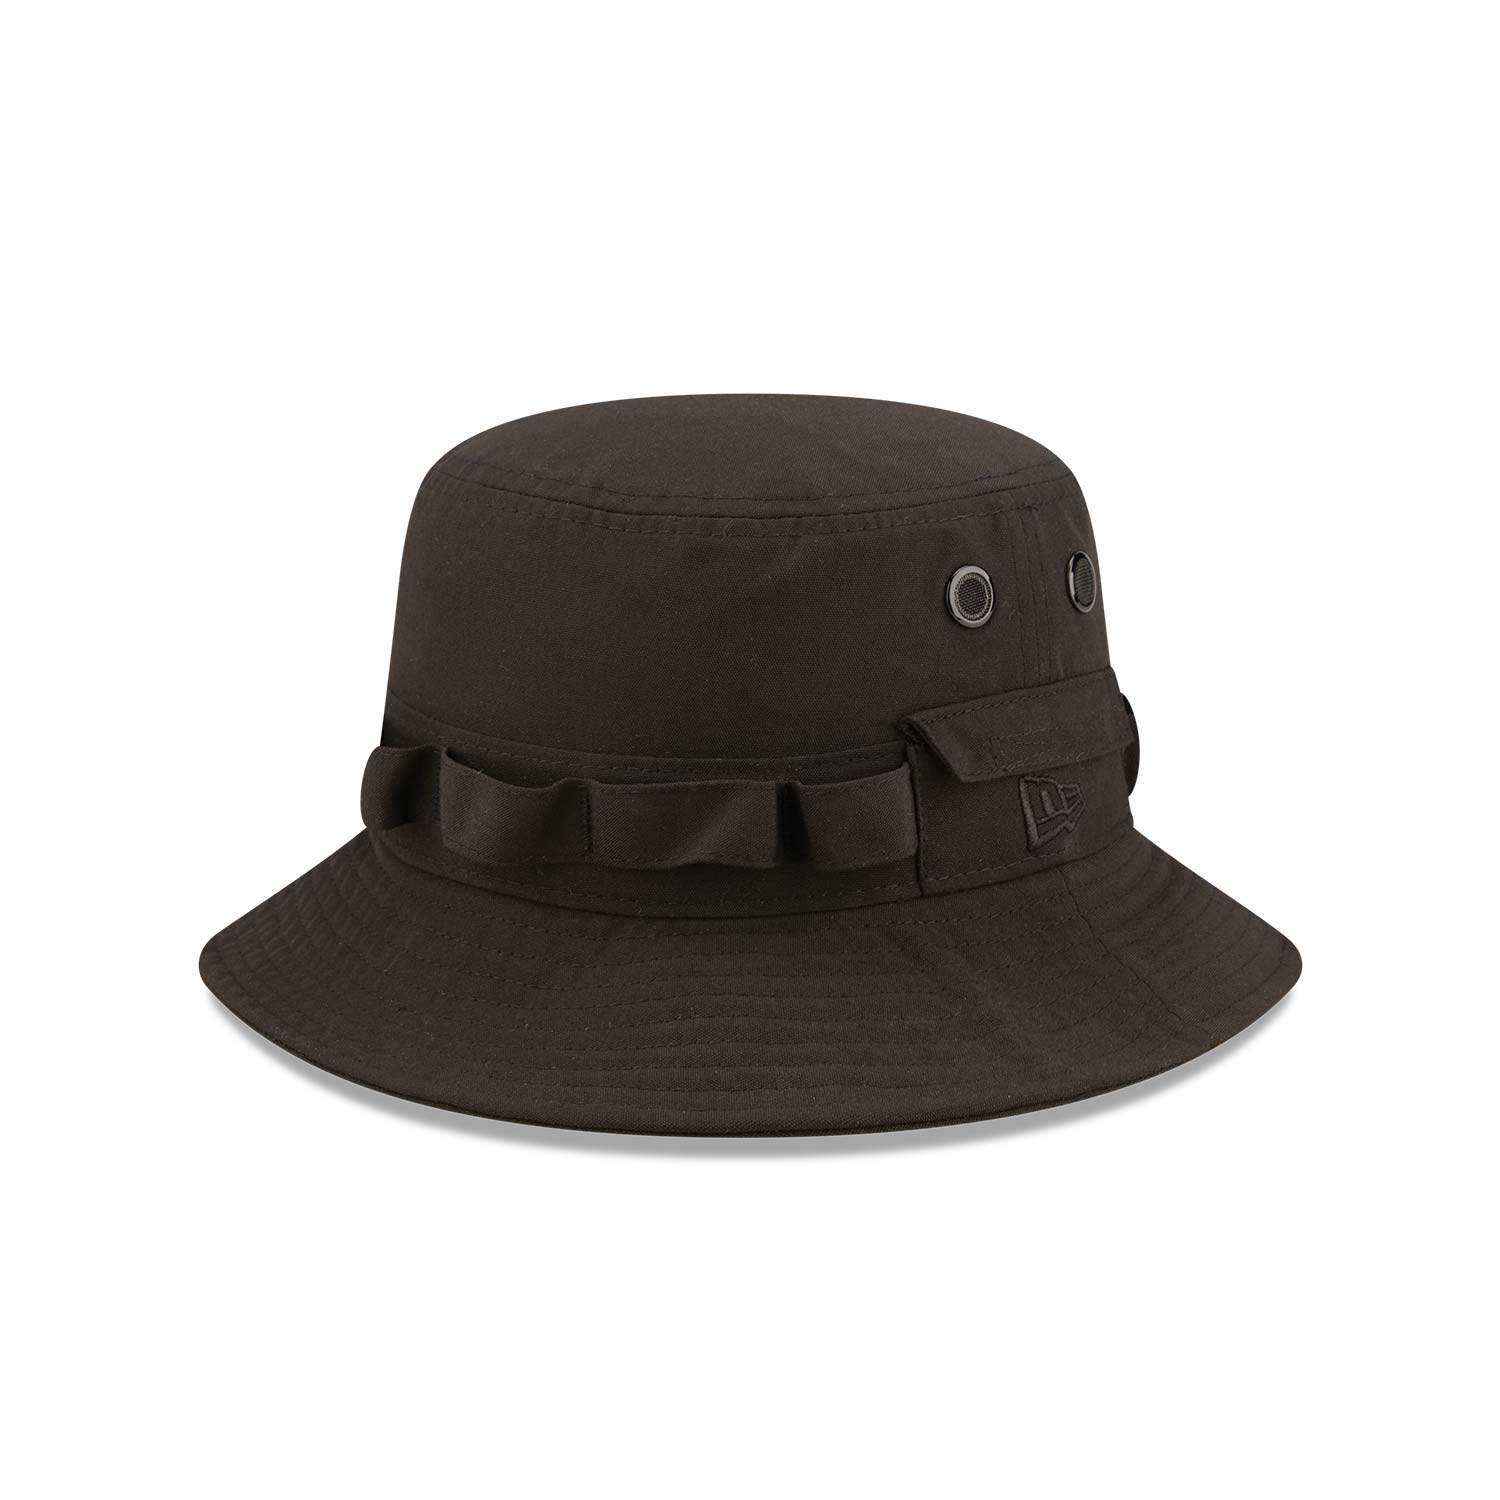 New Era Repreve Adverturer Black Bucket Hat